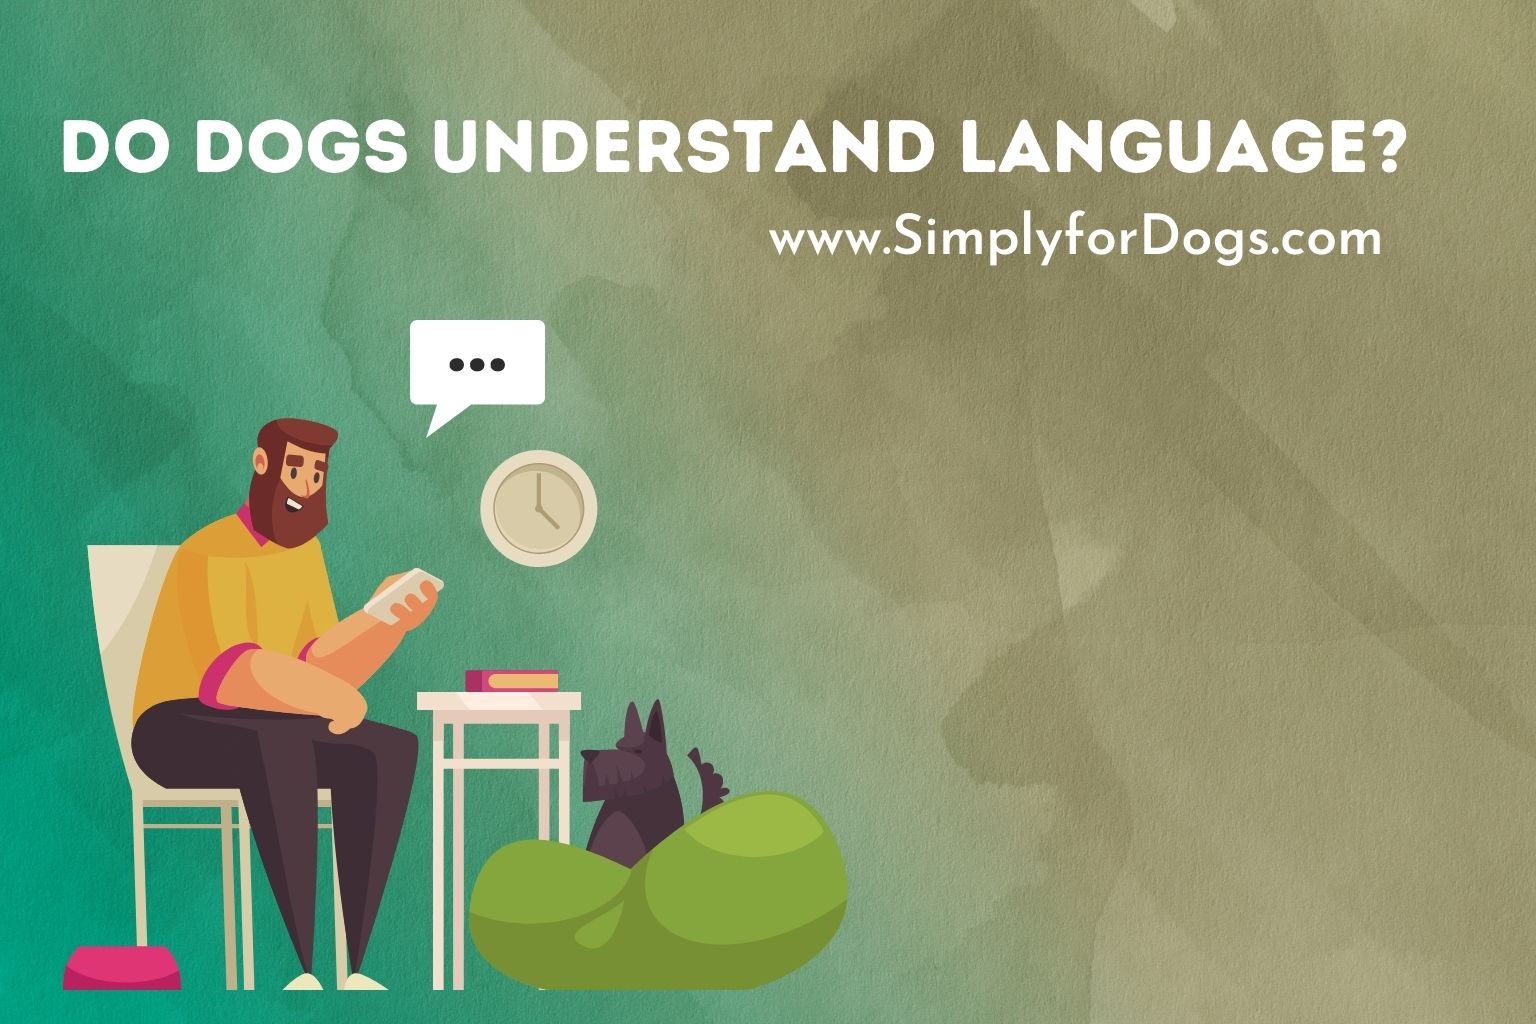 Dogs-Language